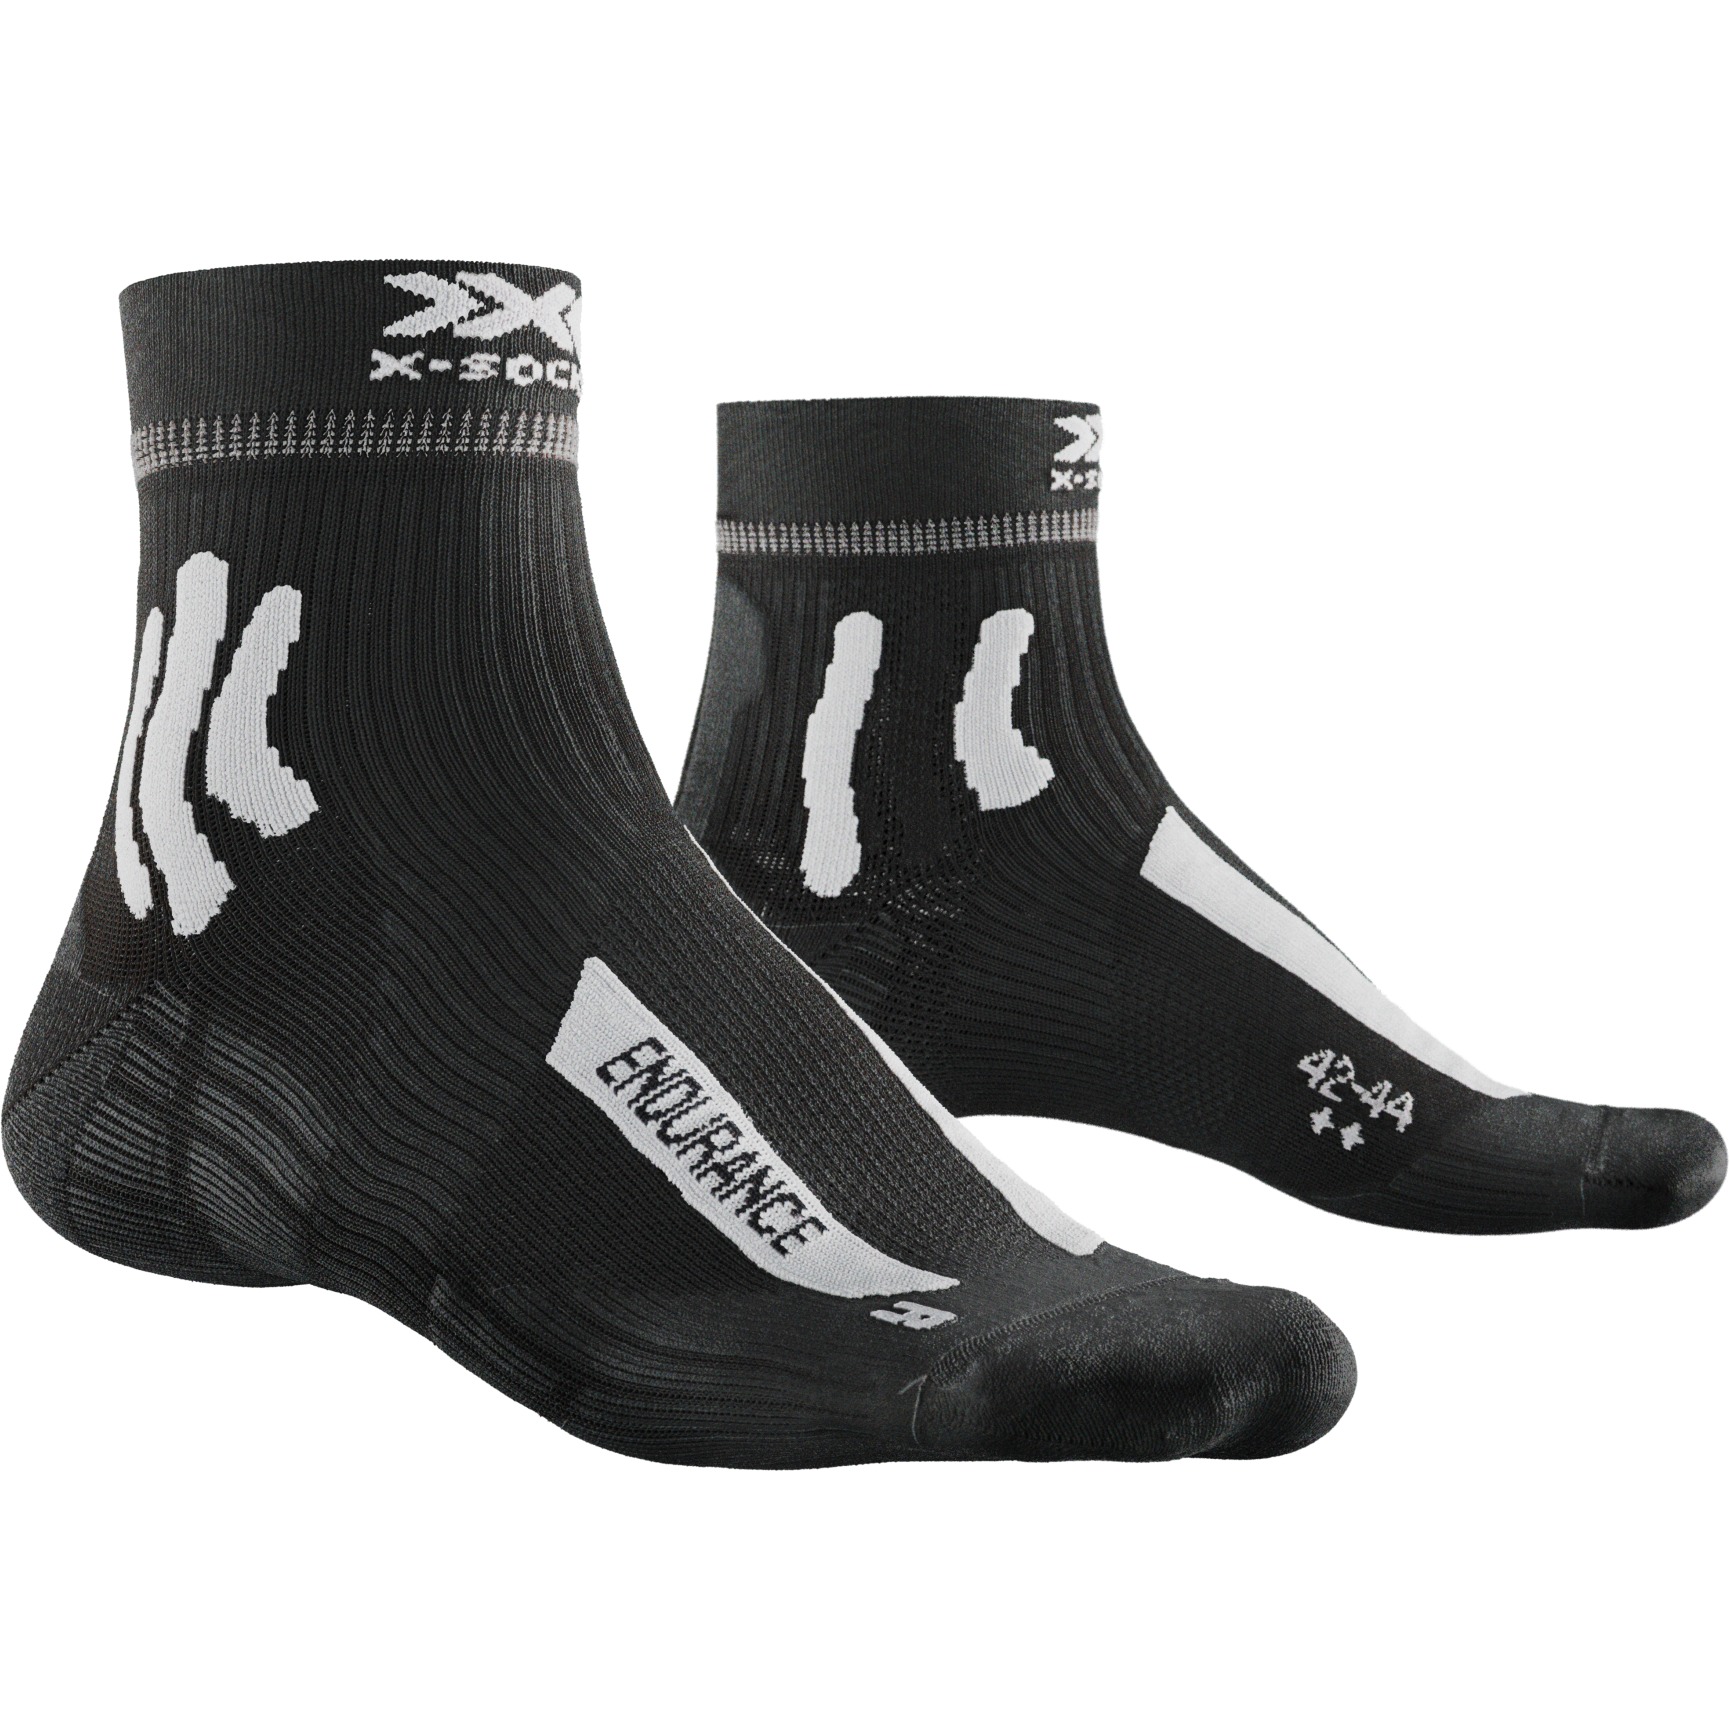 Productfoto van X-Socks Endurance 4.0 Hardloopsokken - opal black/arctic white